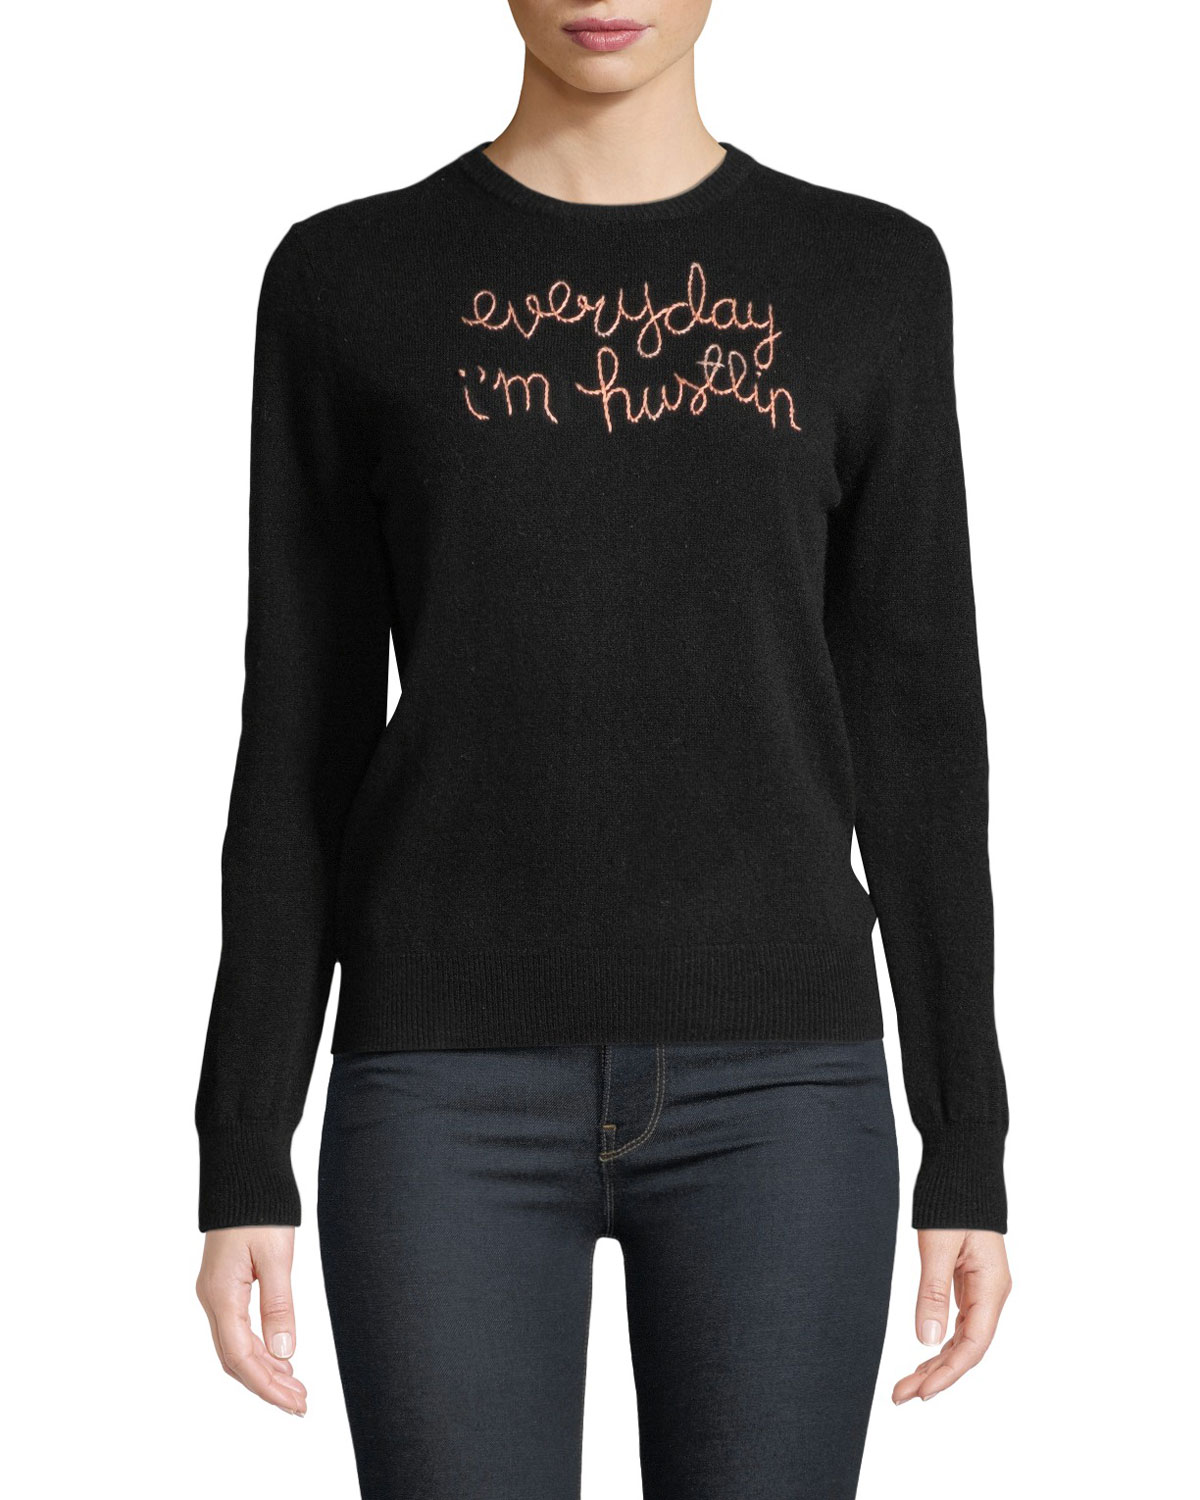 Lingua Franca cashmere sweater, $380